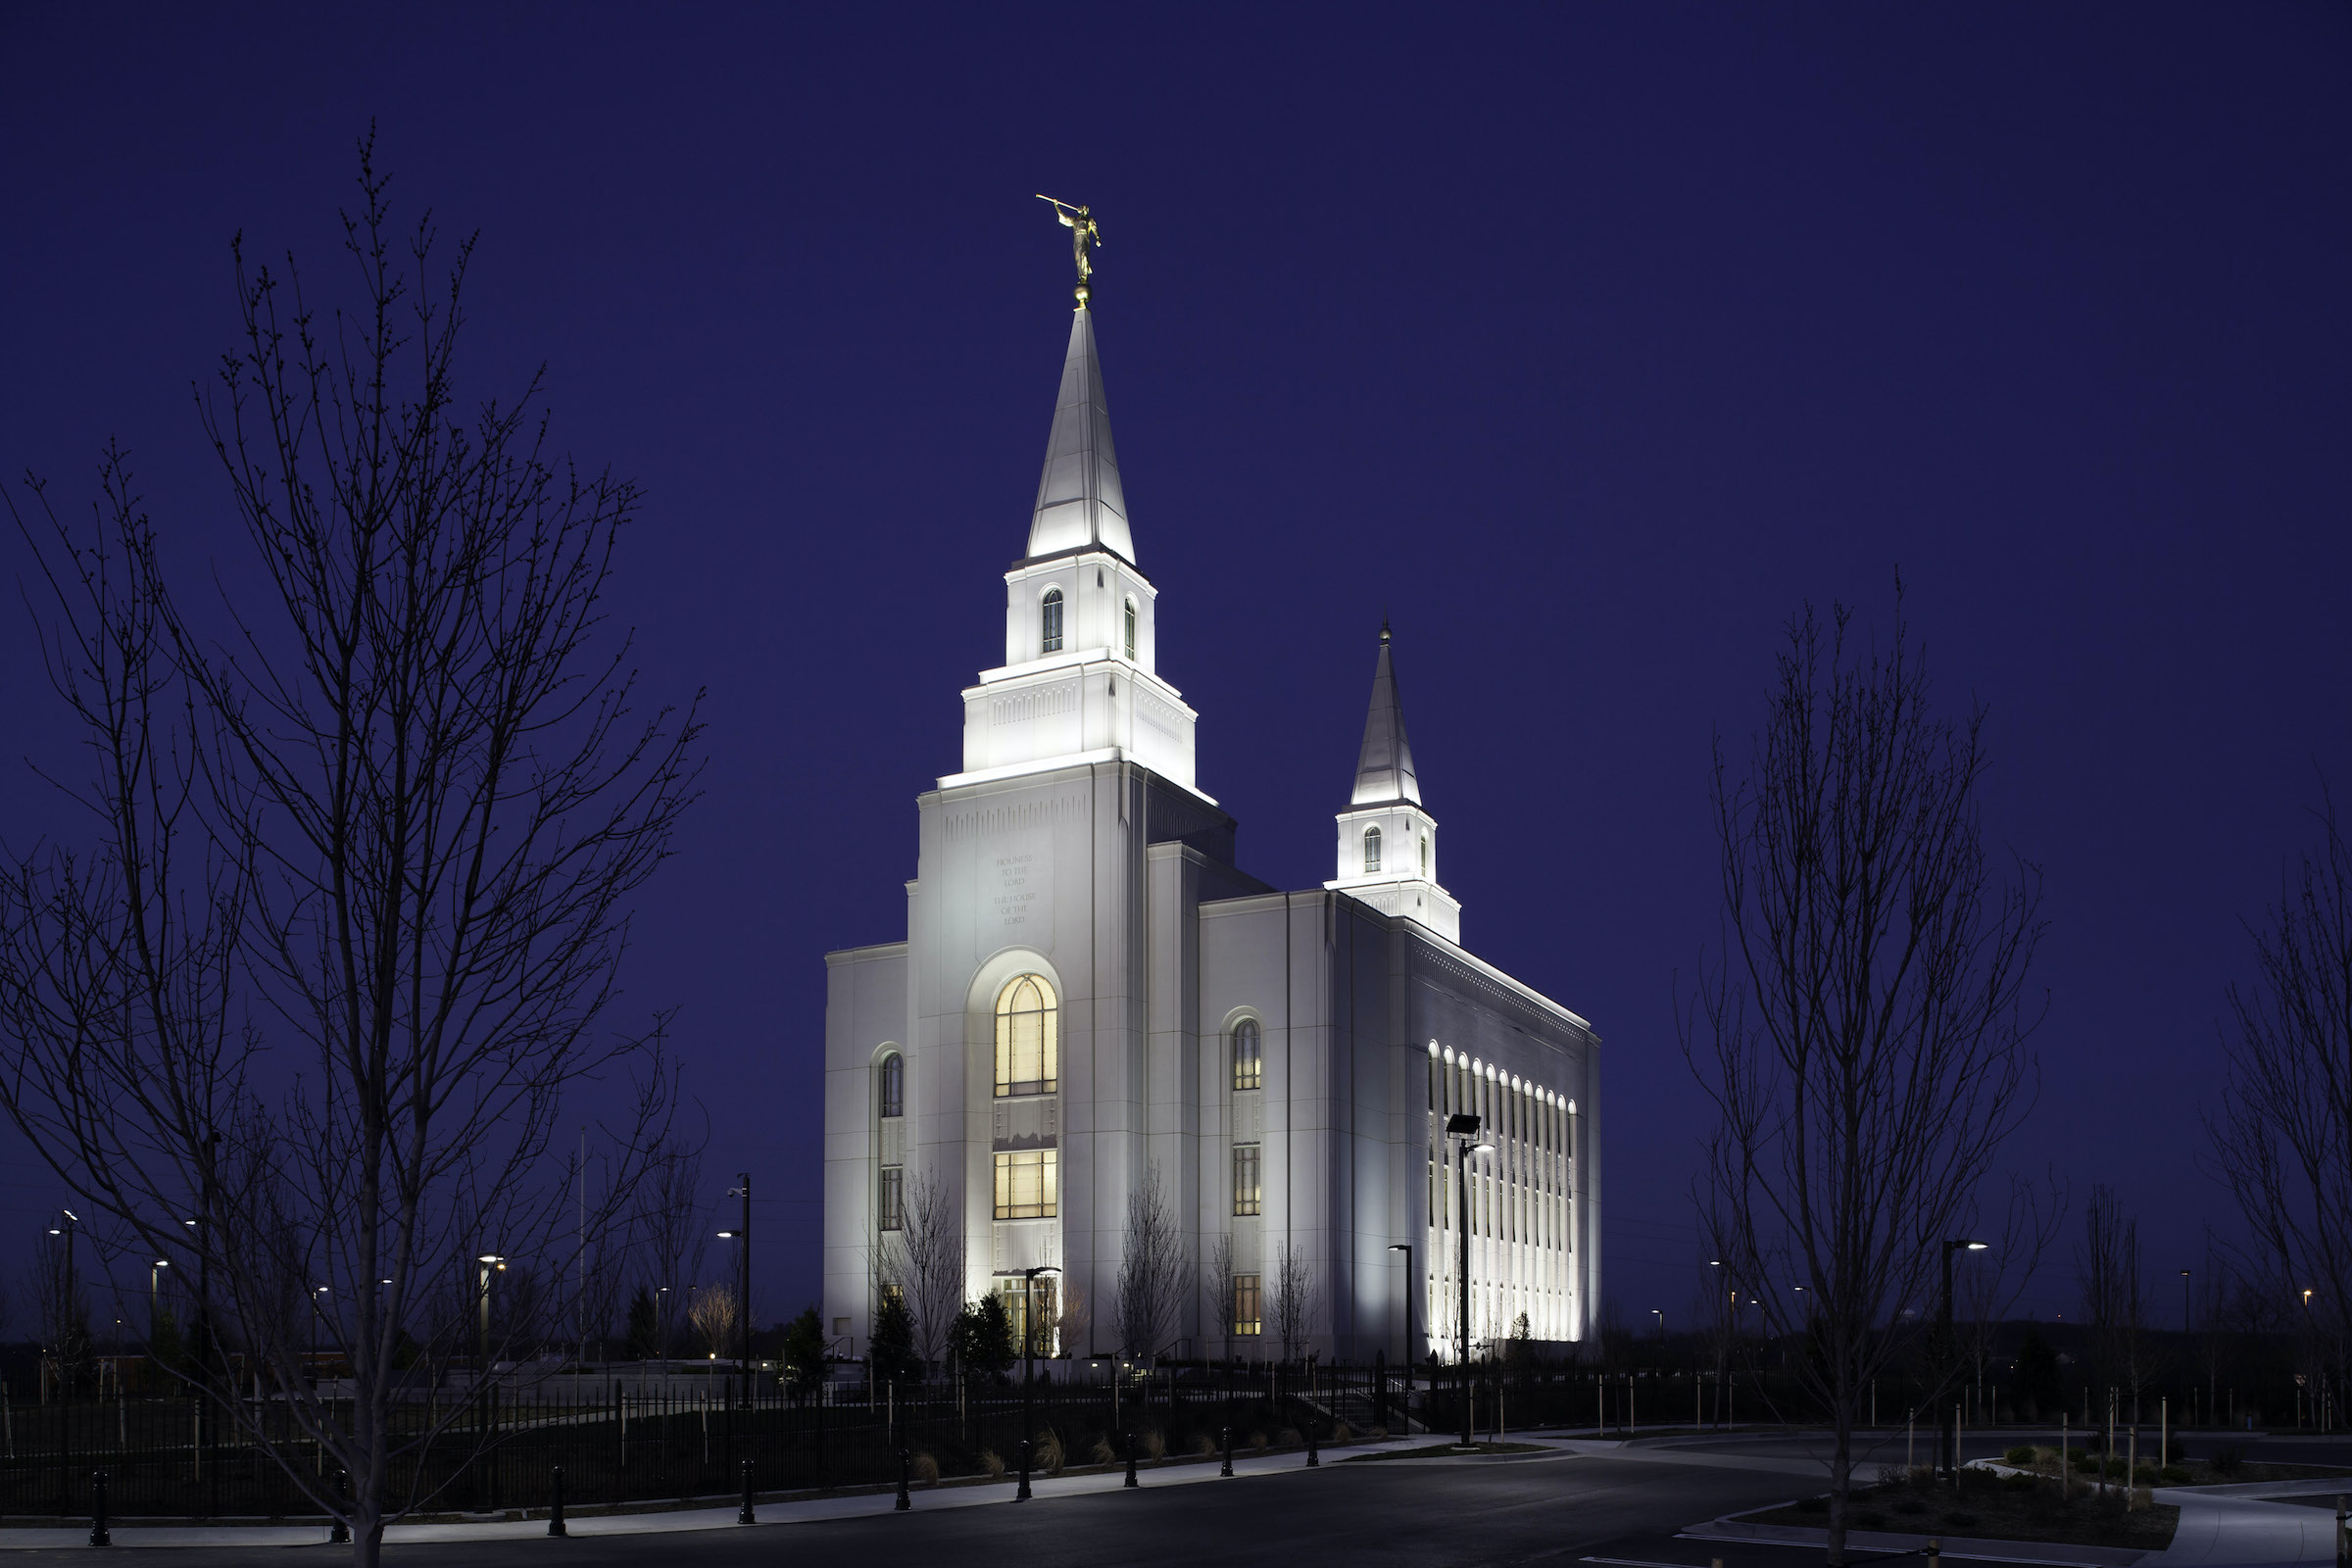 Kansas City Missouri Mormon Temple